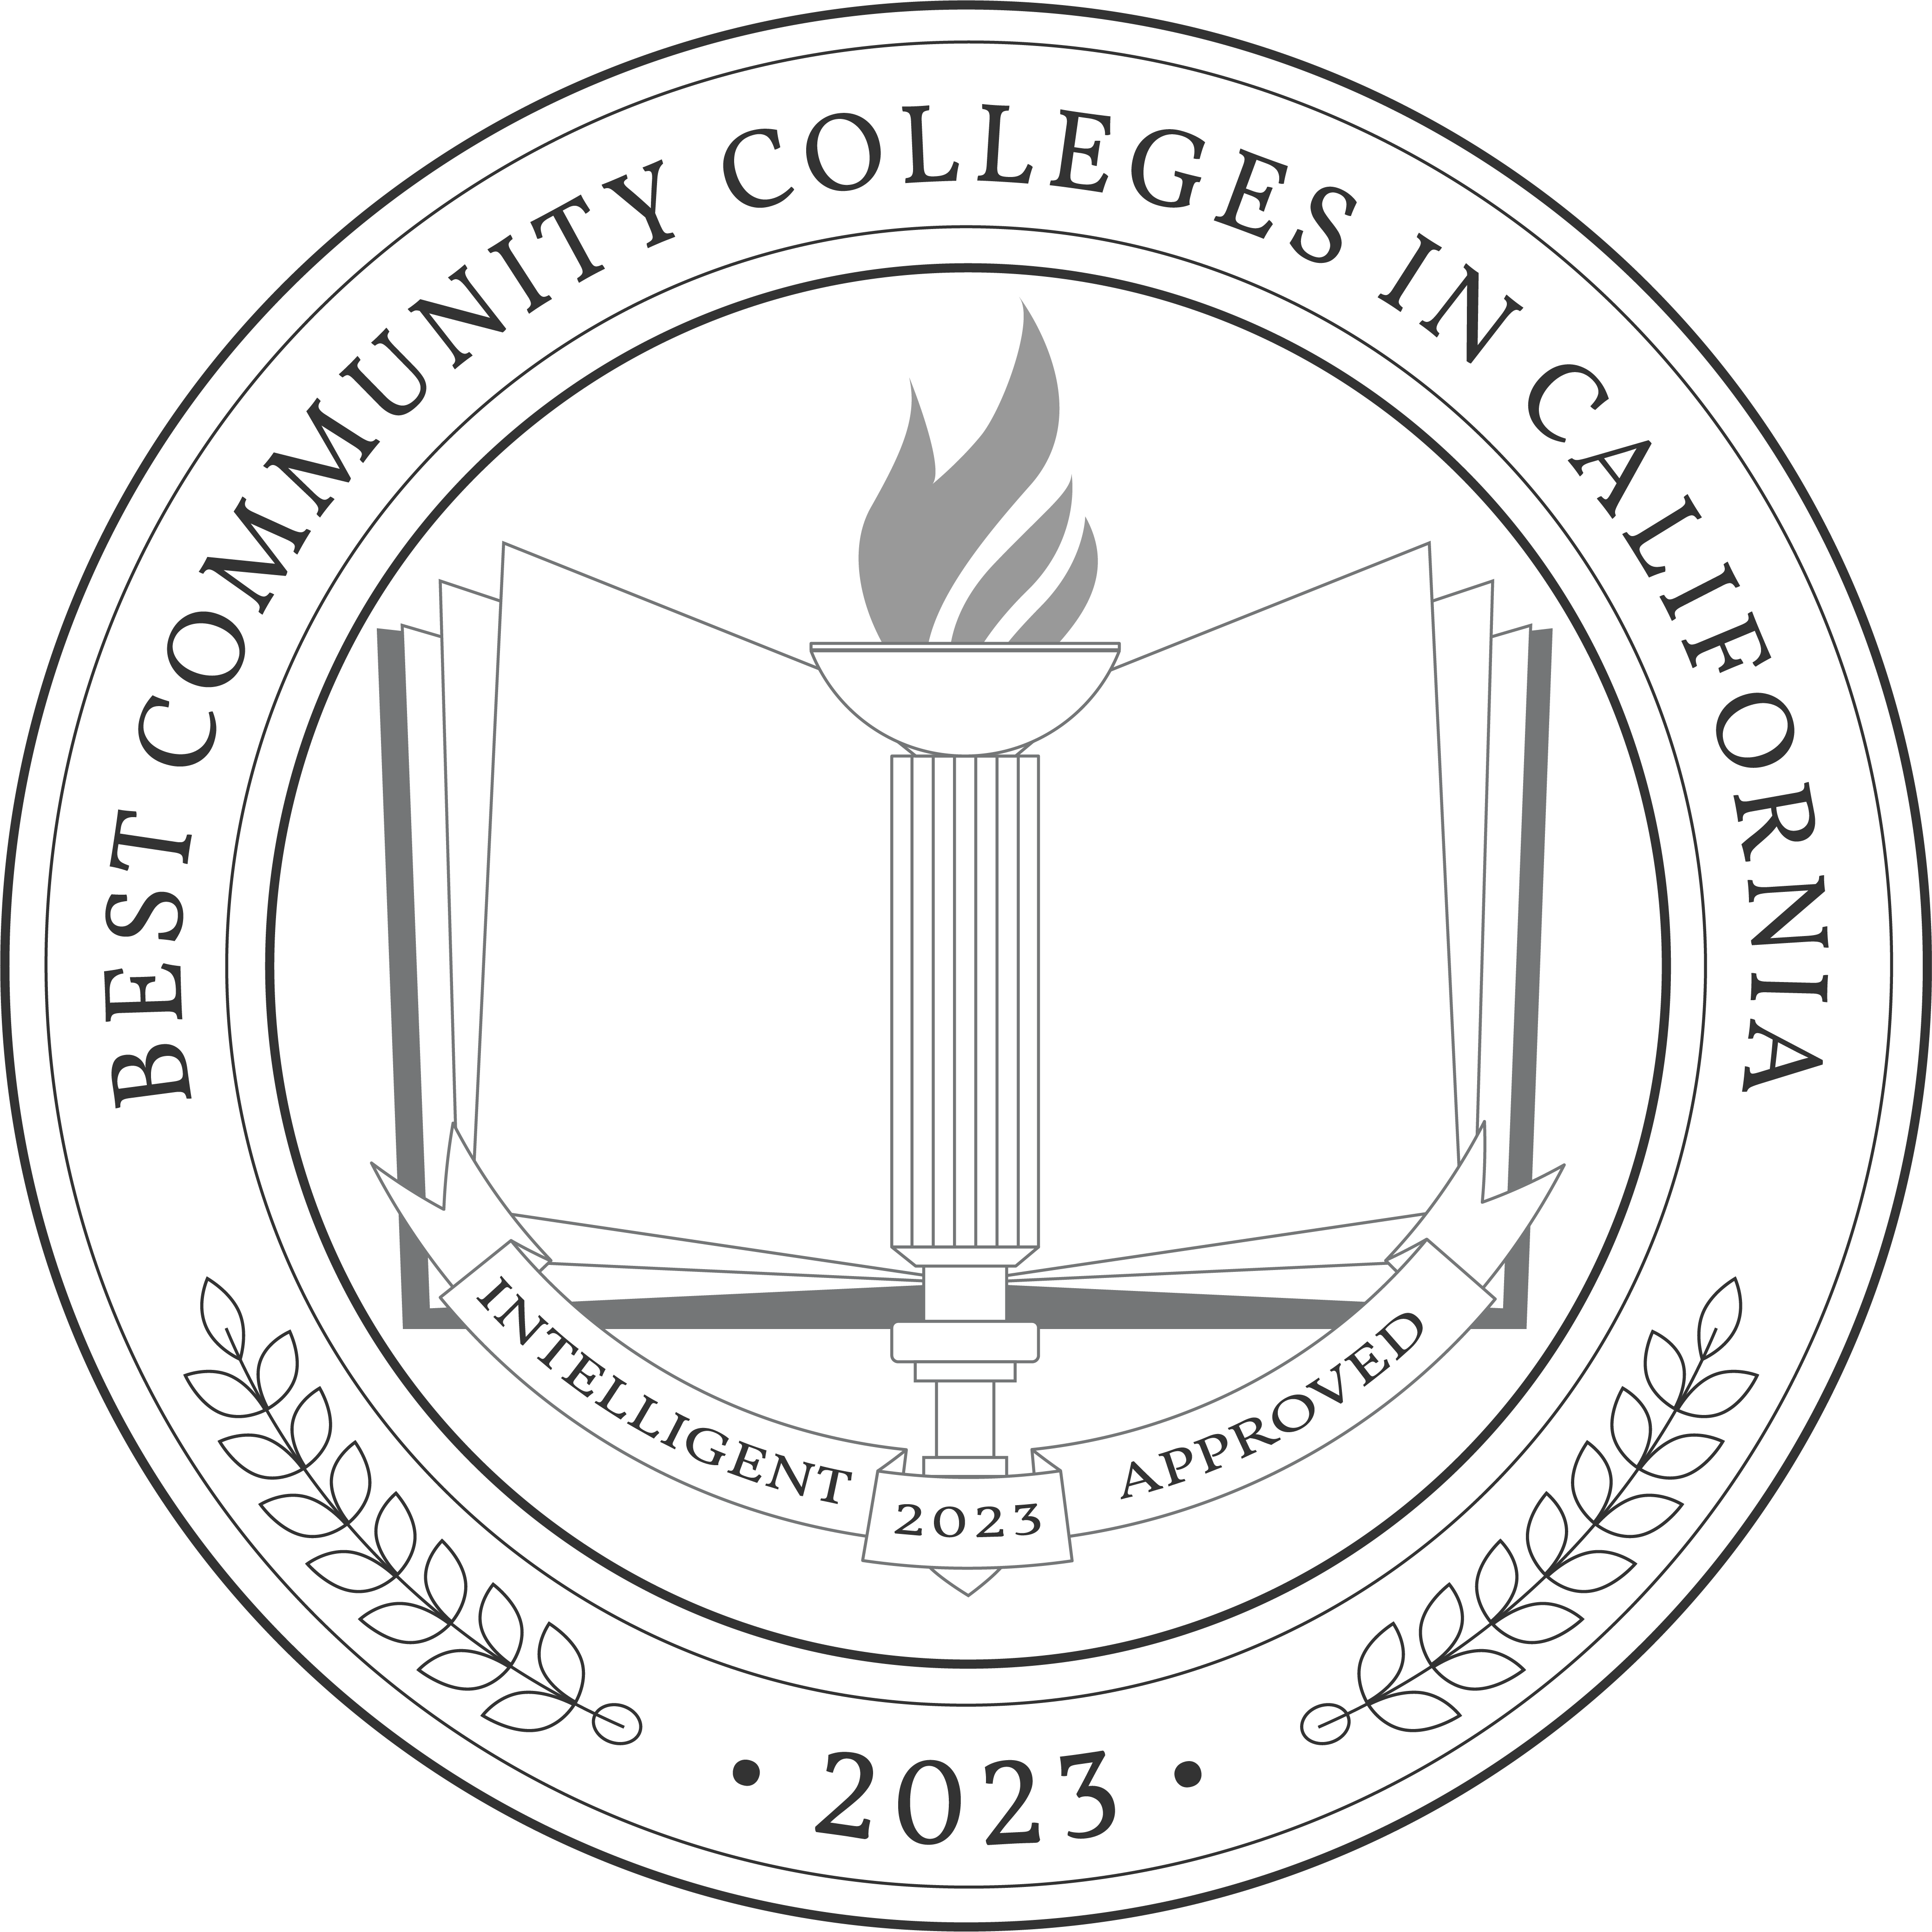 best community college in california award